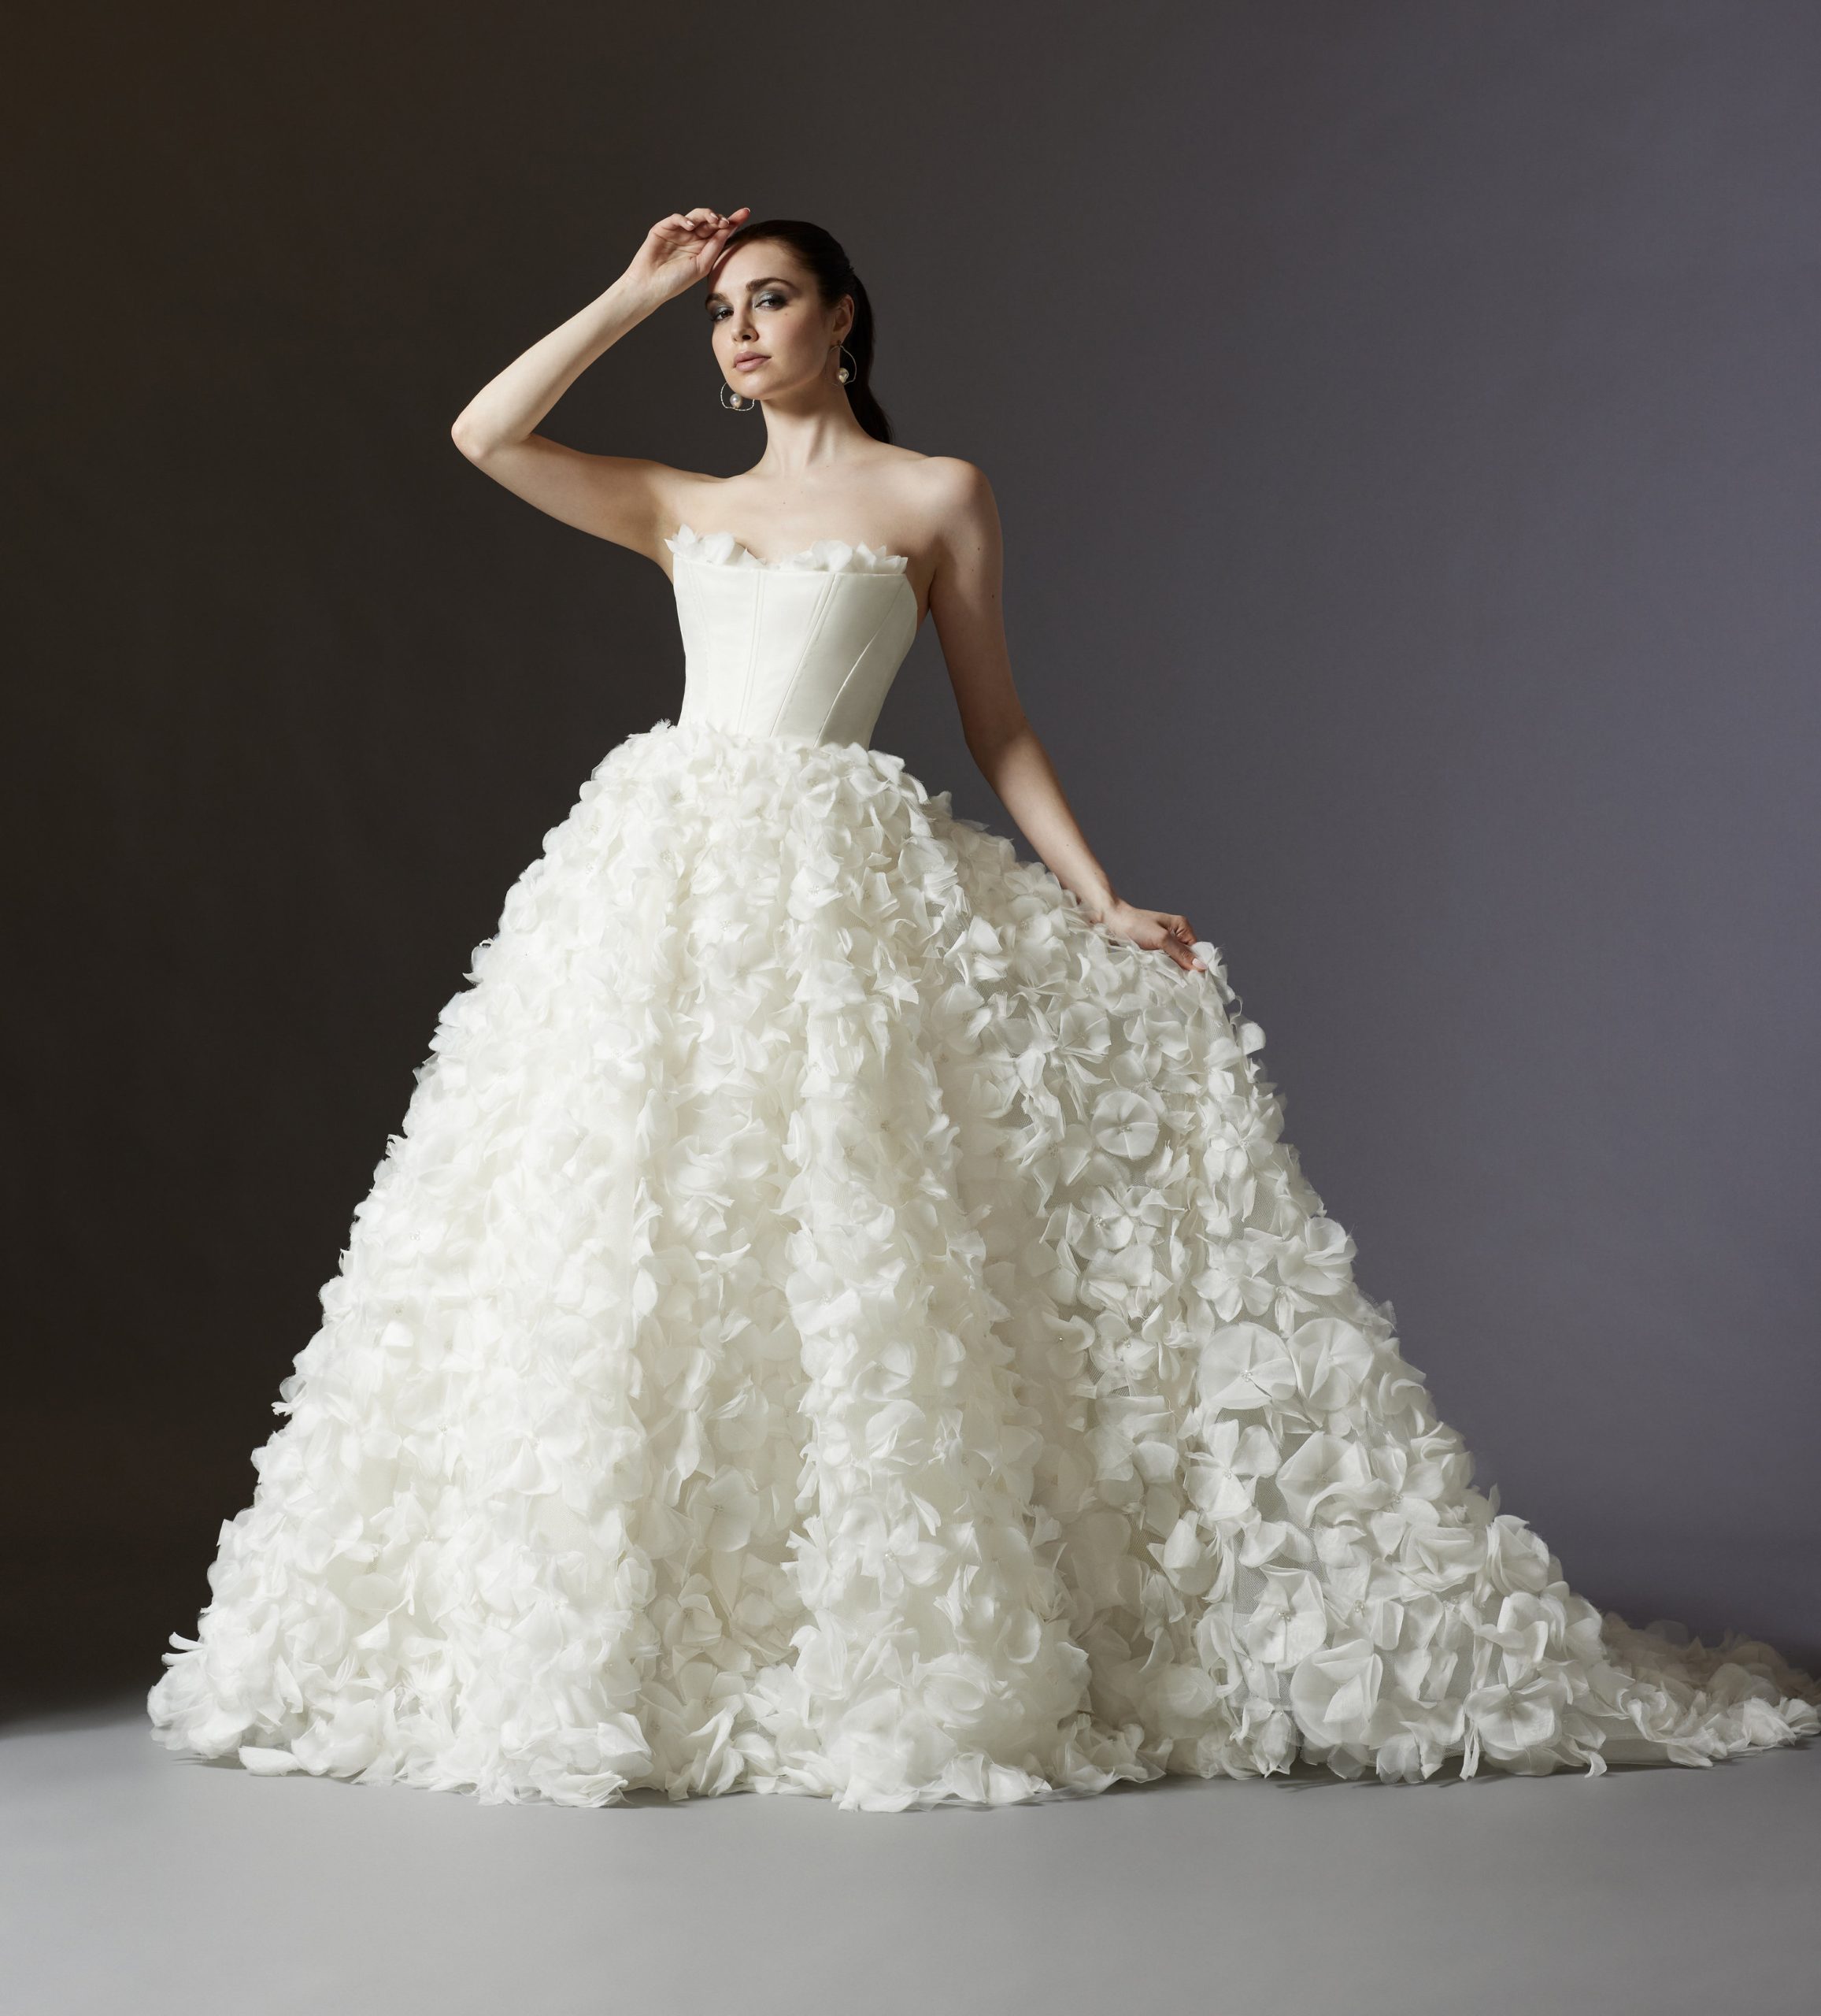 Strapless Ball Gown Wedding Dress With Textured Organza Floral Petal Skirt